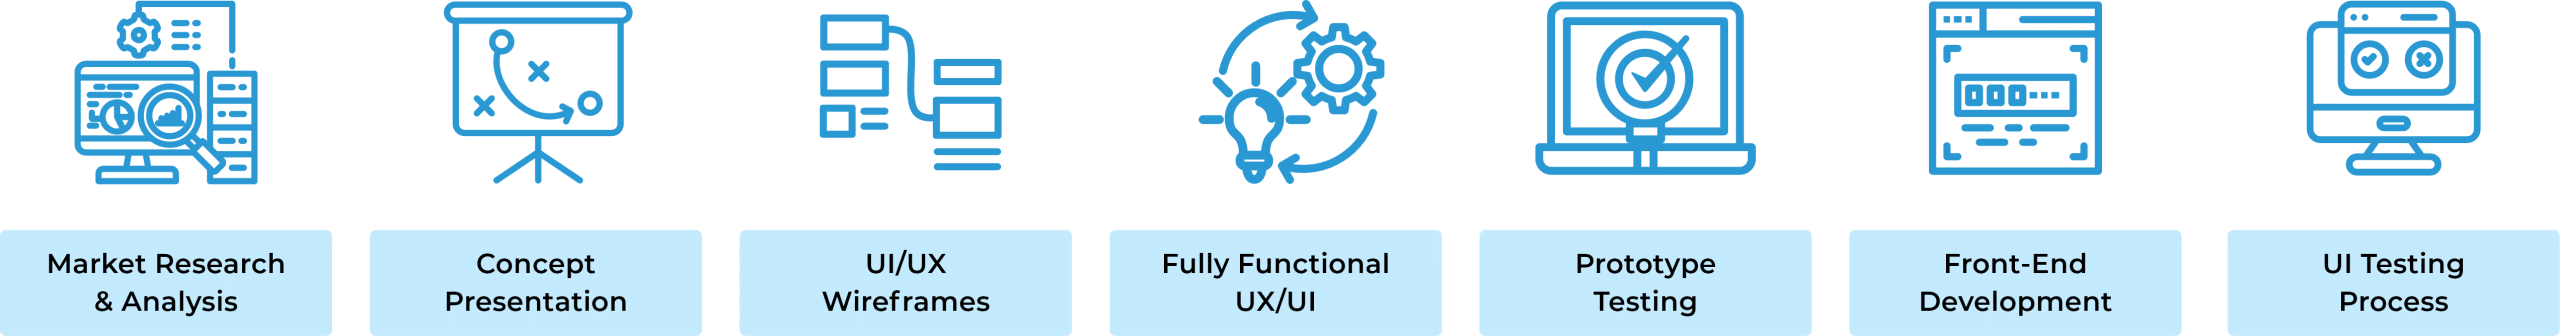 Our approach to providing UIUX Design Services